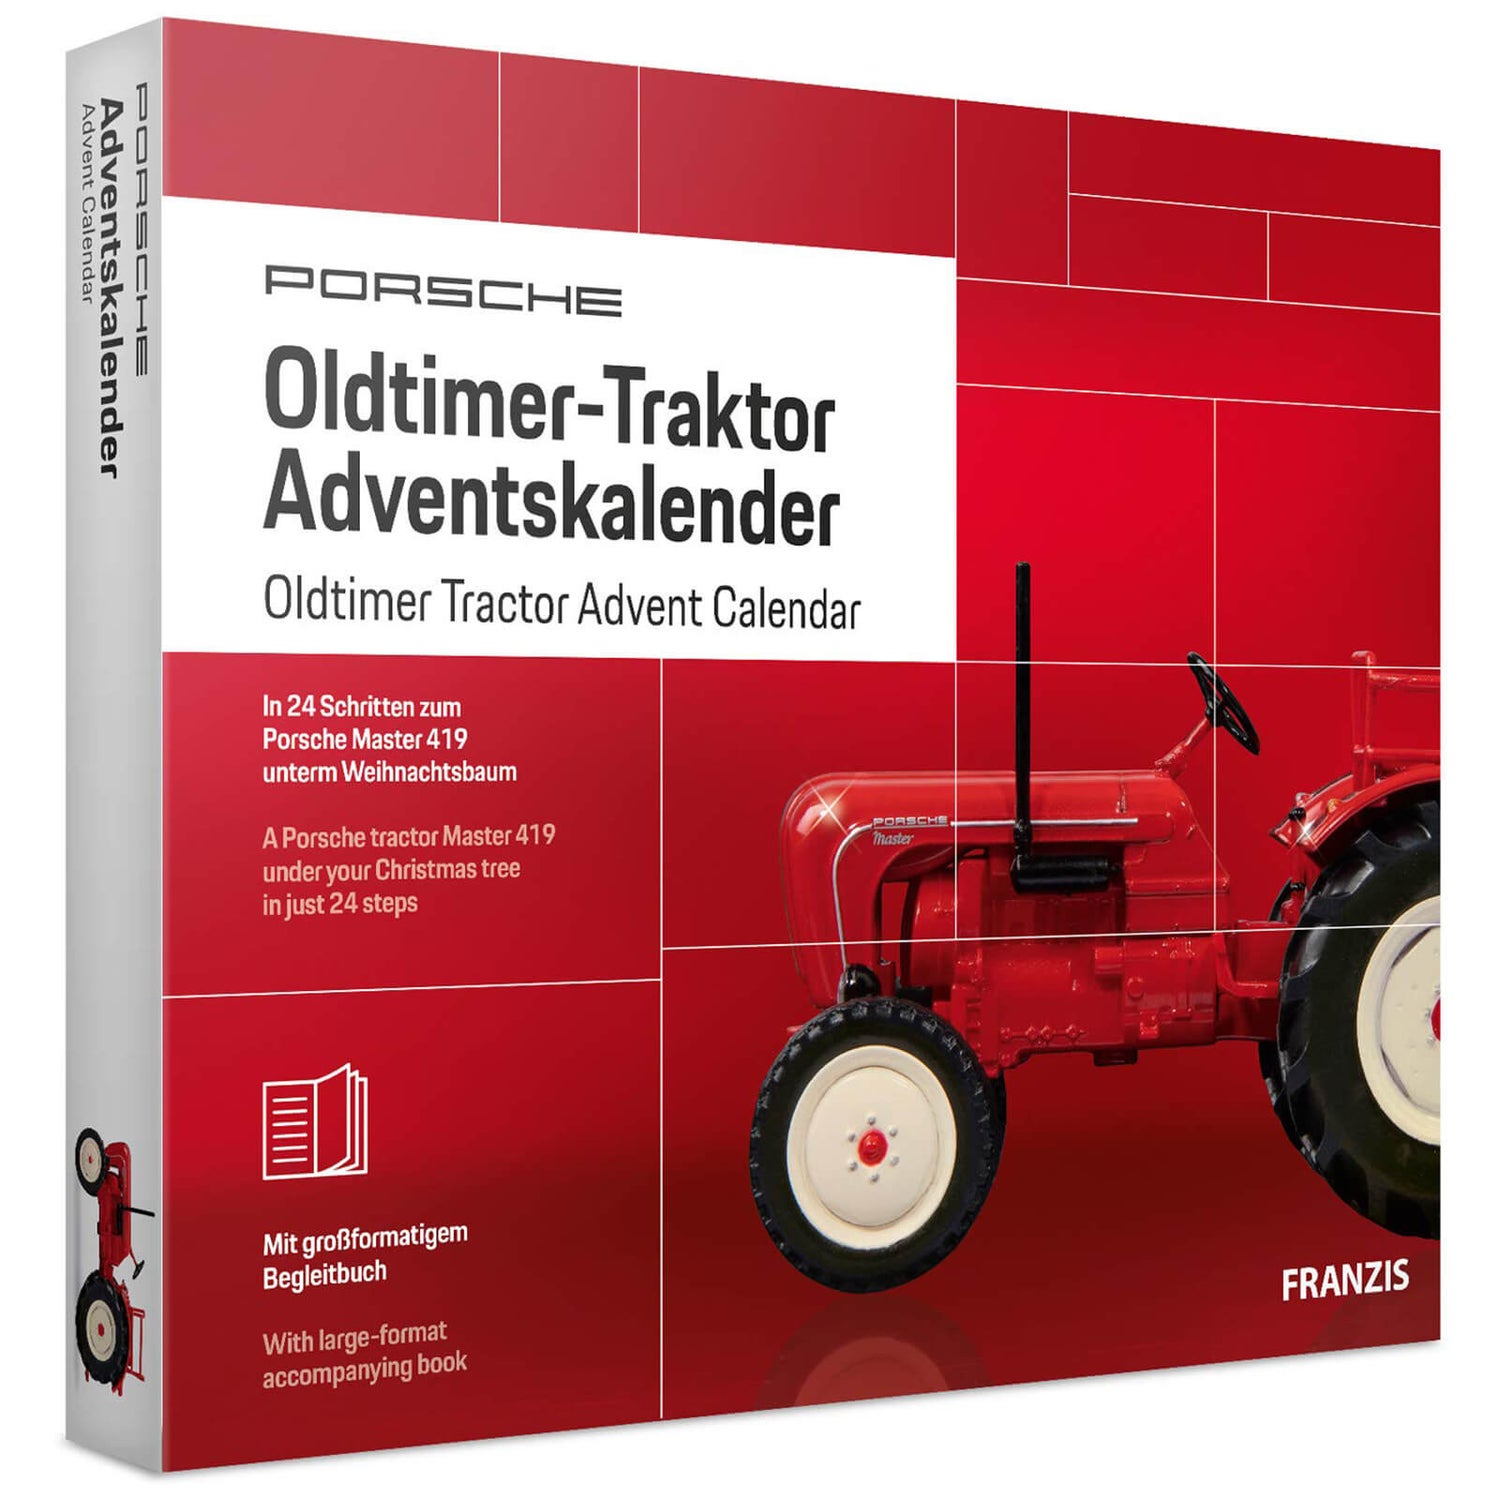 Franzis Official Porsche Traktor Adventskalender